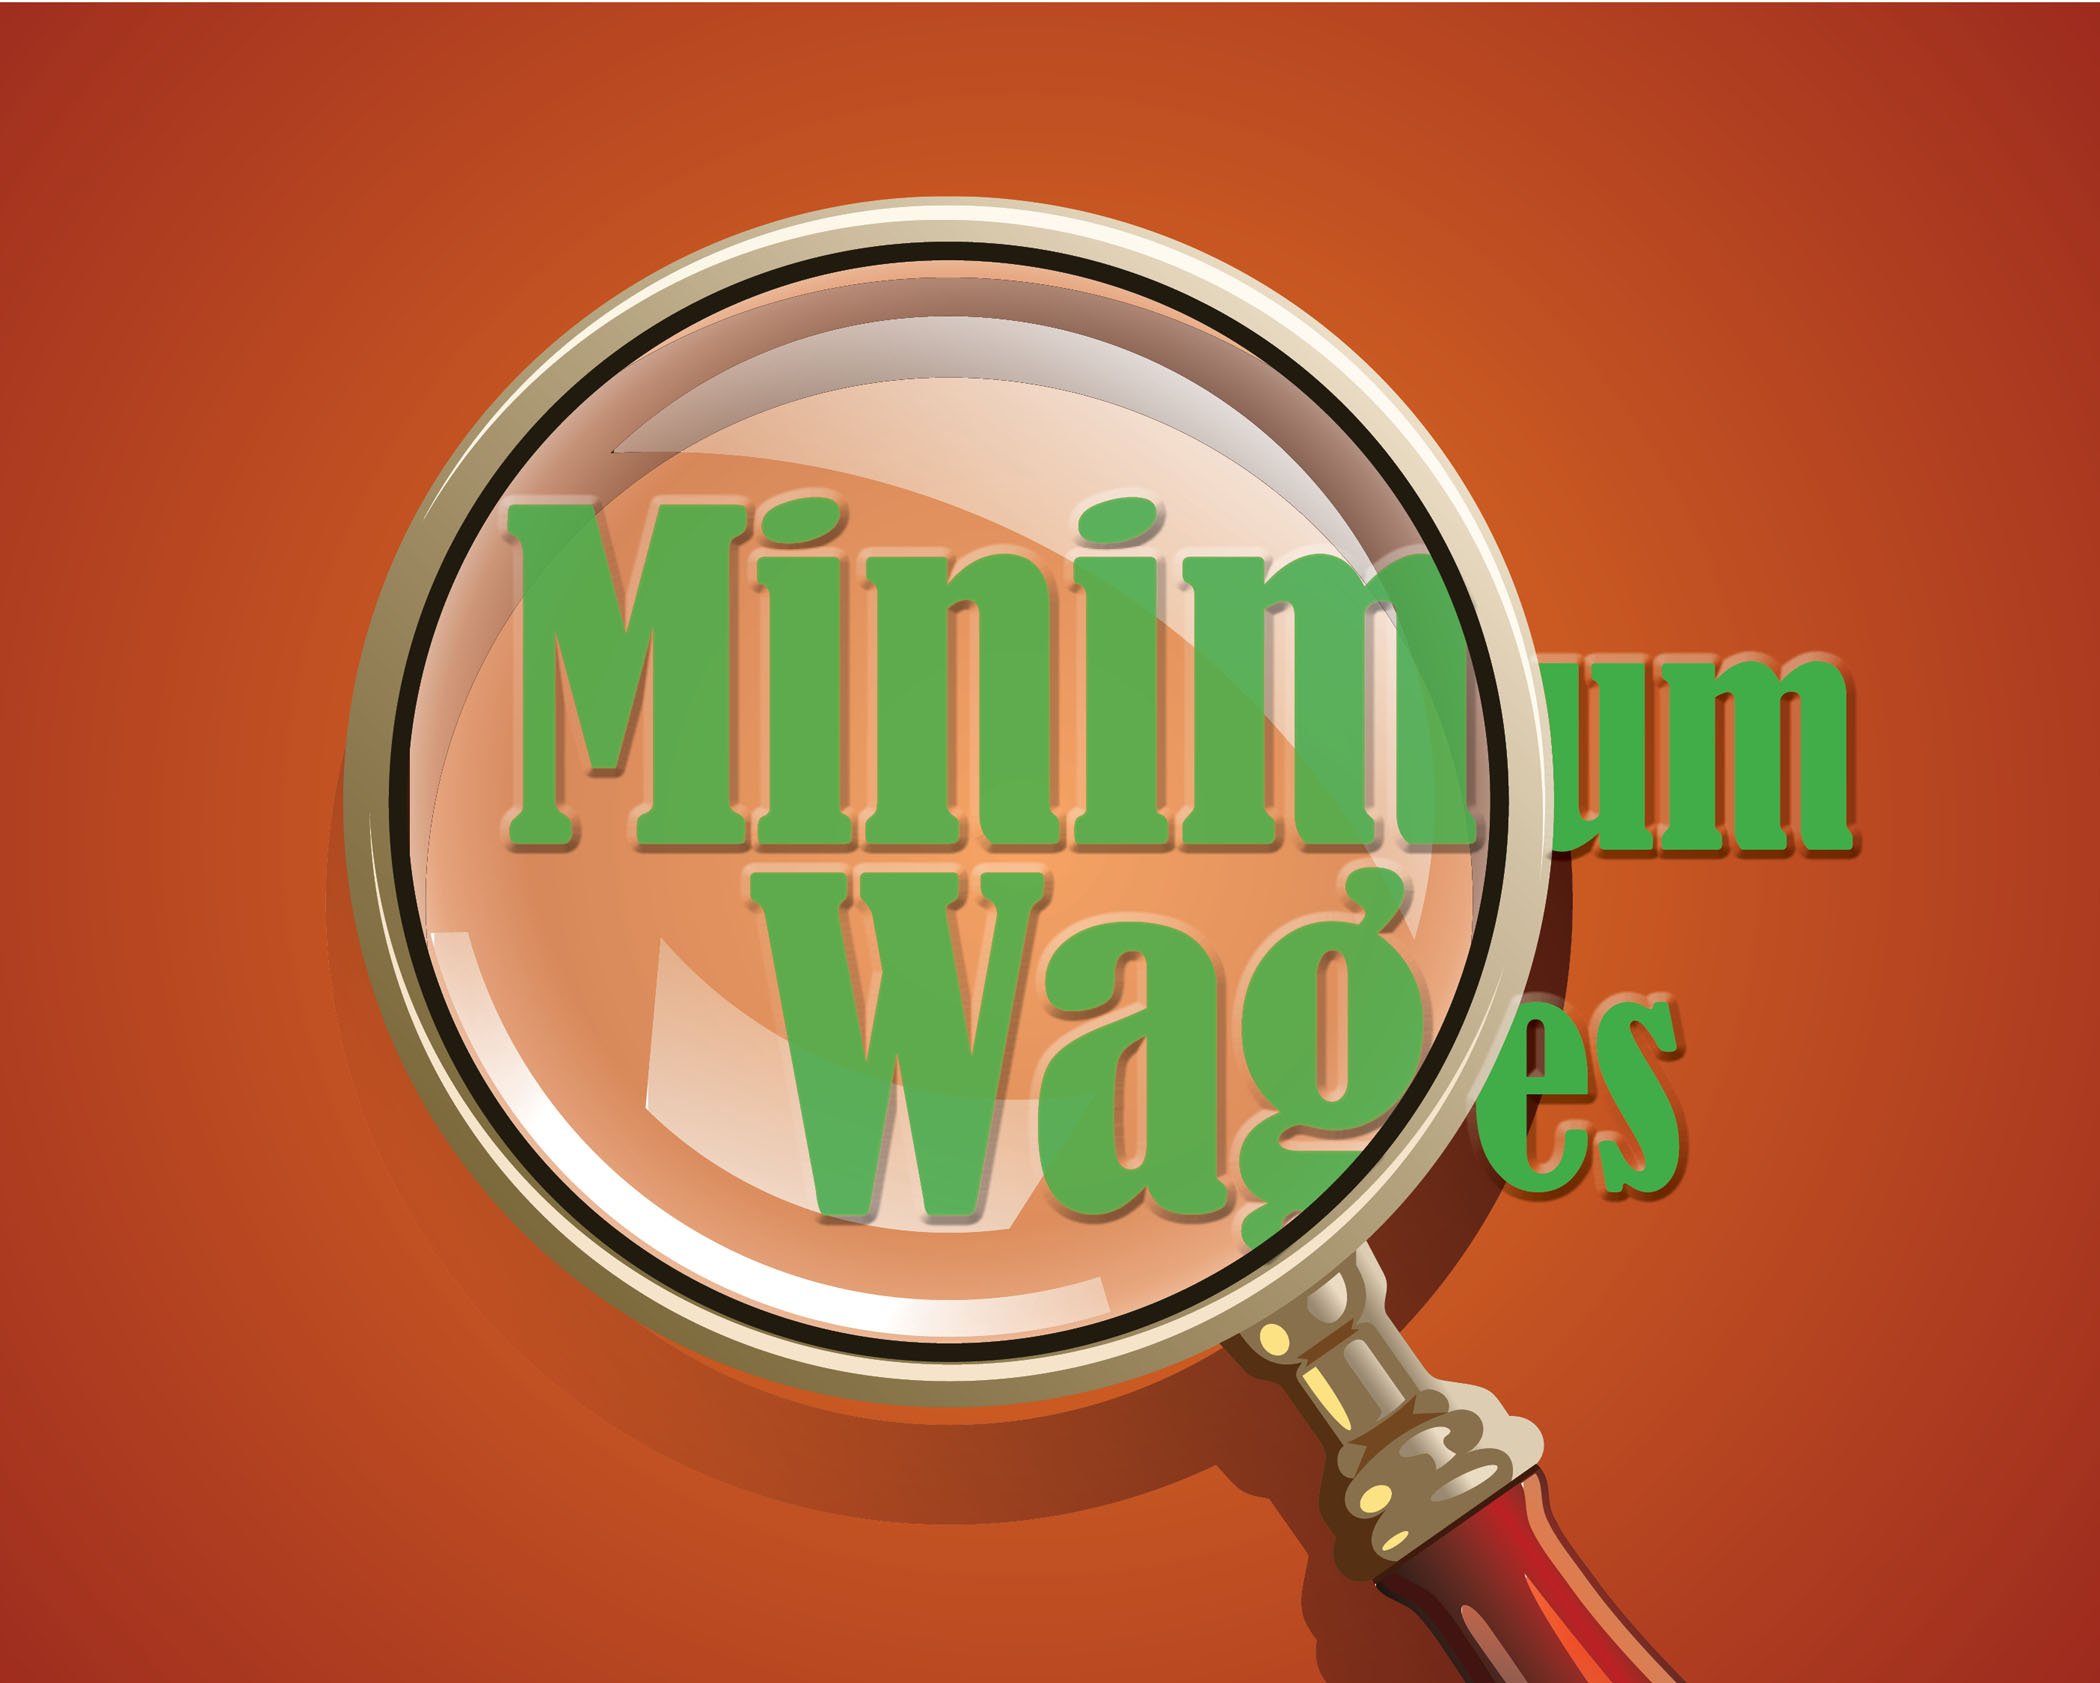 Characteristics of minimum wage workers, 2015 image